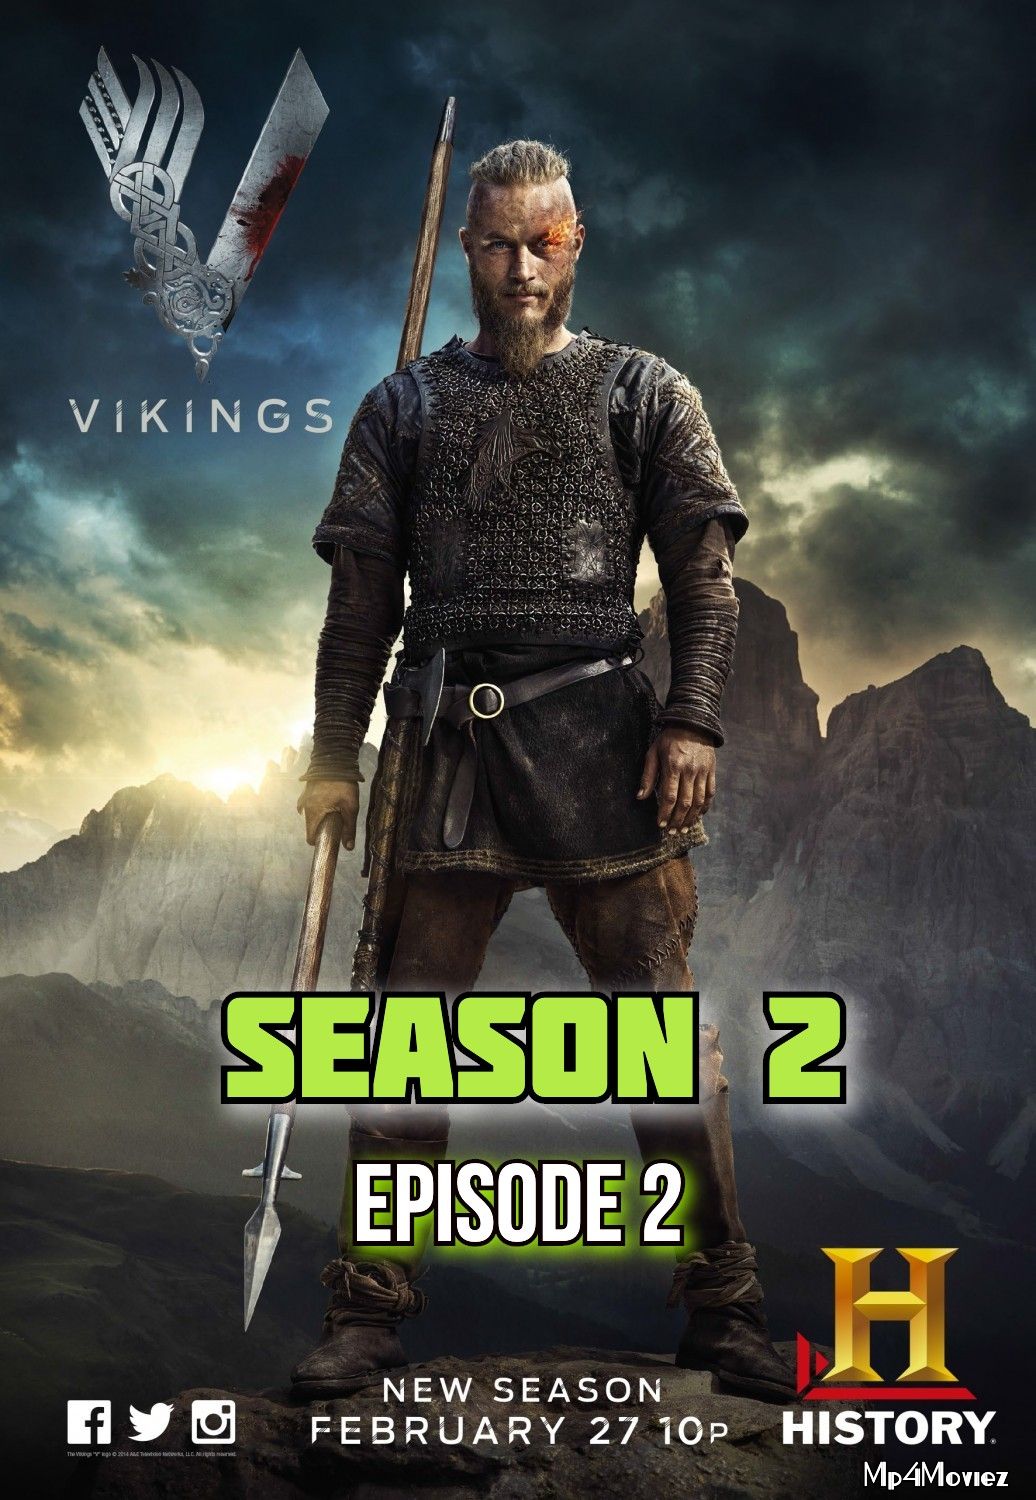 Vikings S02E02 (Invasion) Hindi Dubbed download full movie